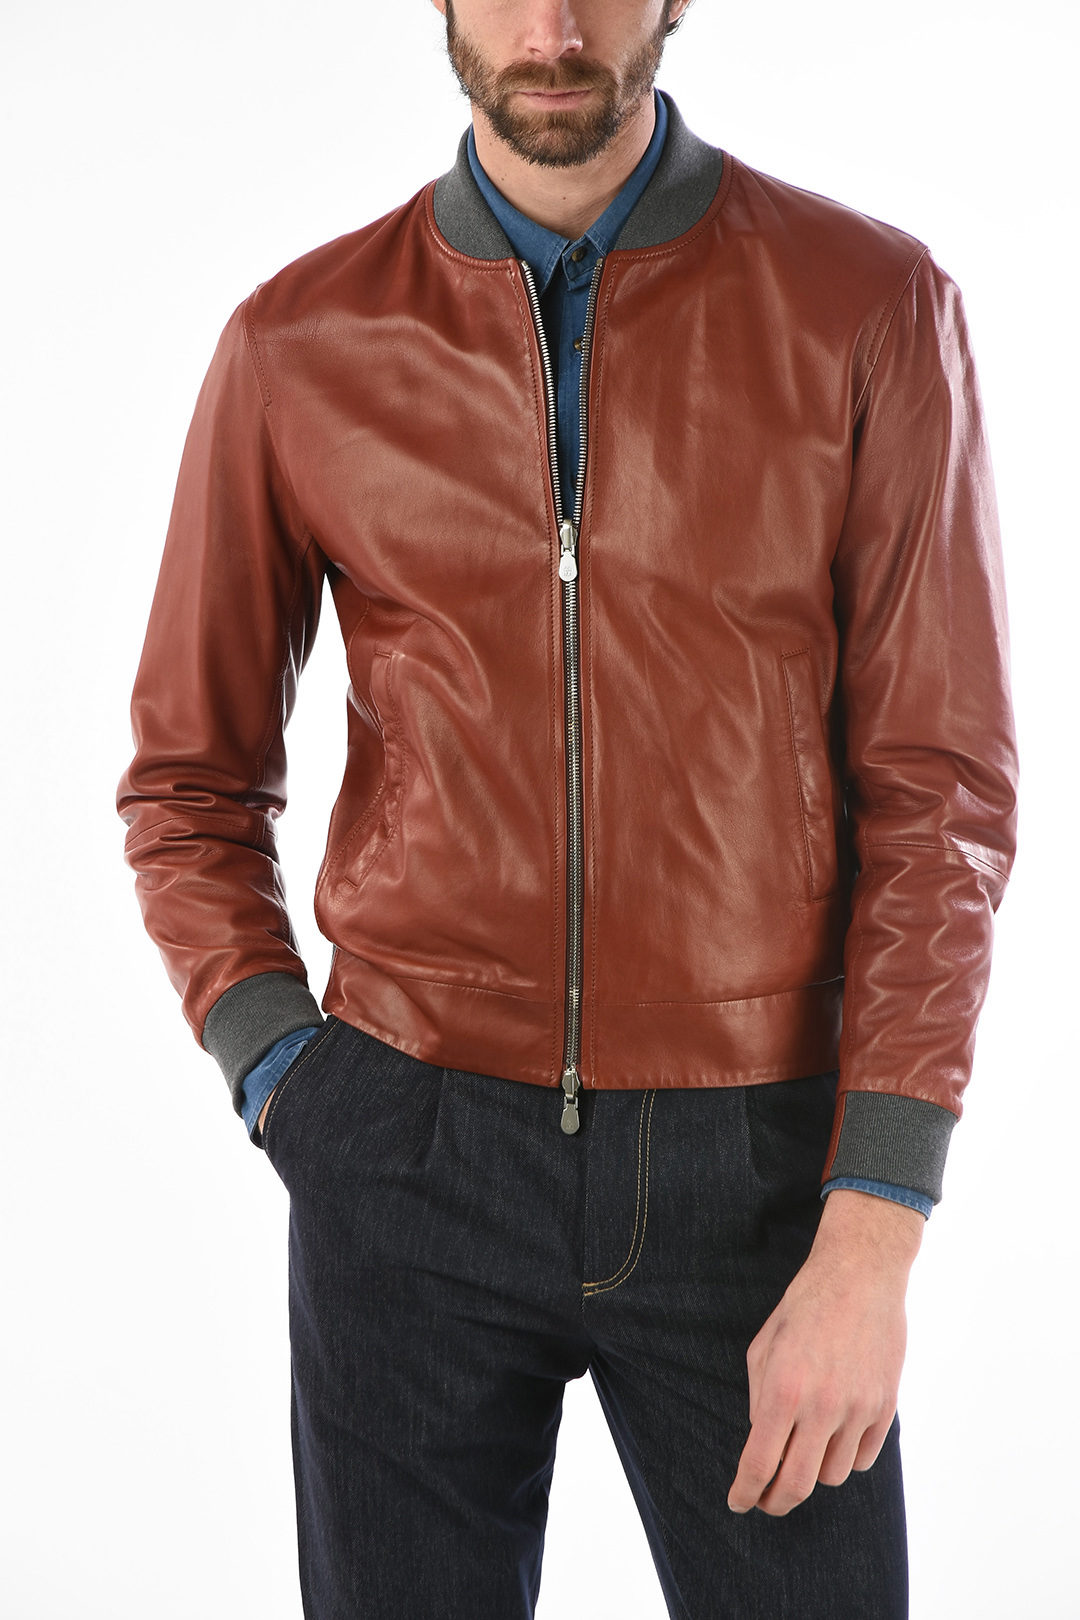 Brunello Cucinelli $5000 reversible leather jacket! Stunning! www.unae ...